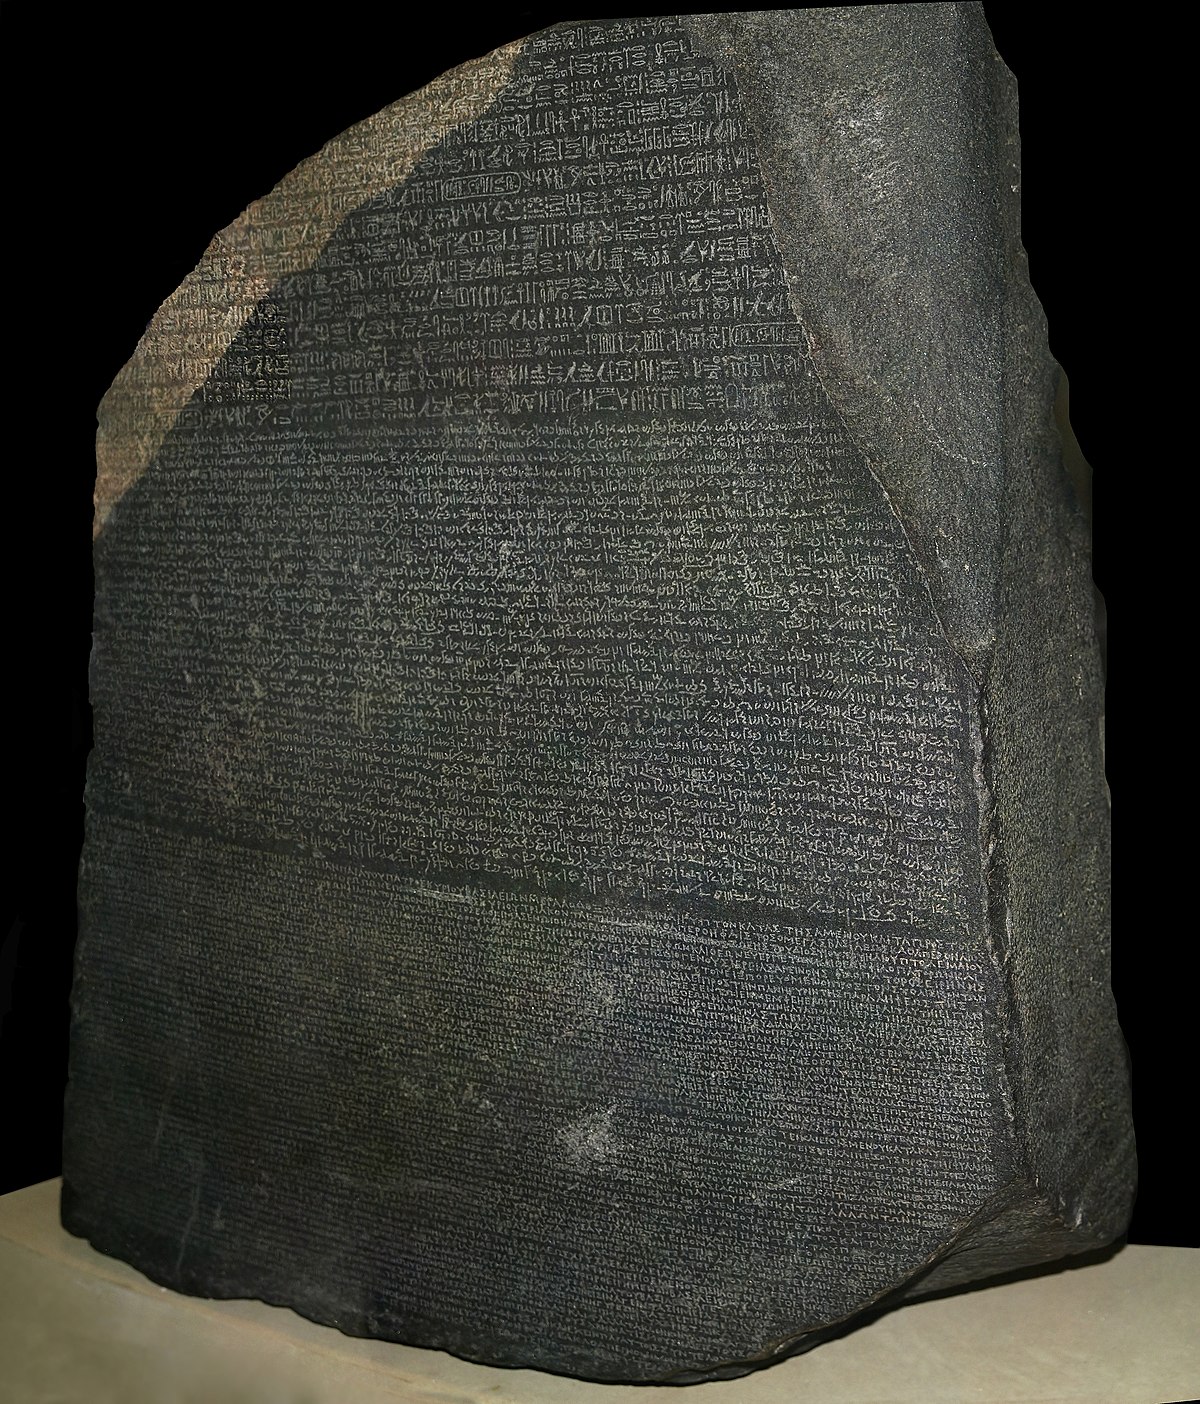 Rosetta Stone - Wikipedia